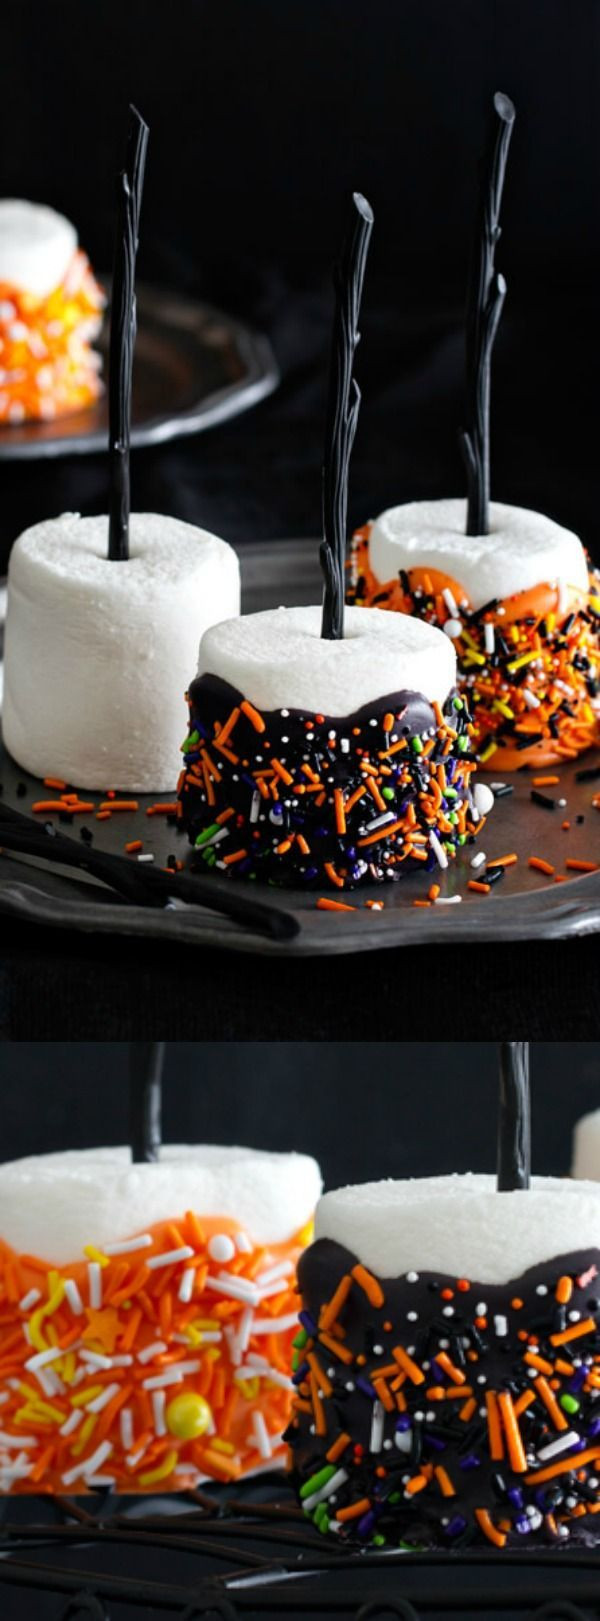 Fun Halloween Desserts
 These Halloween Marshmallow Pops from My Baking Addiction